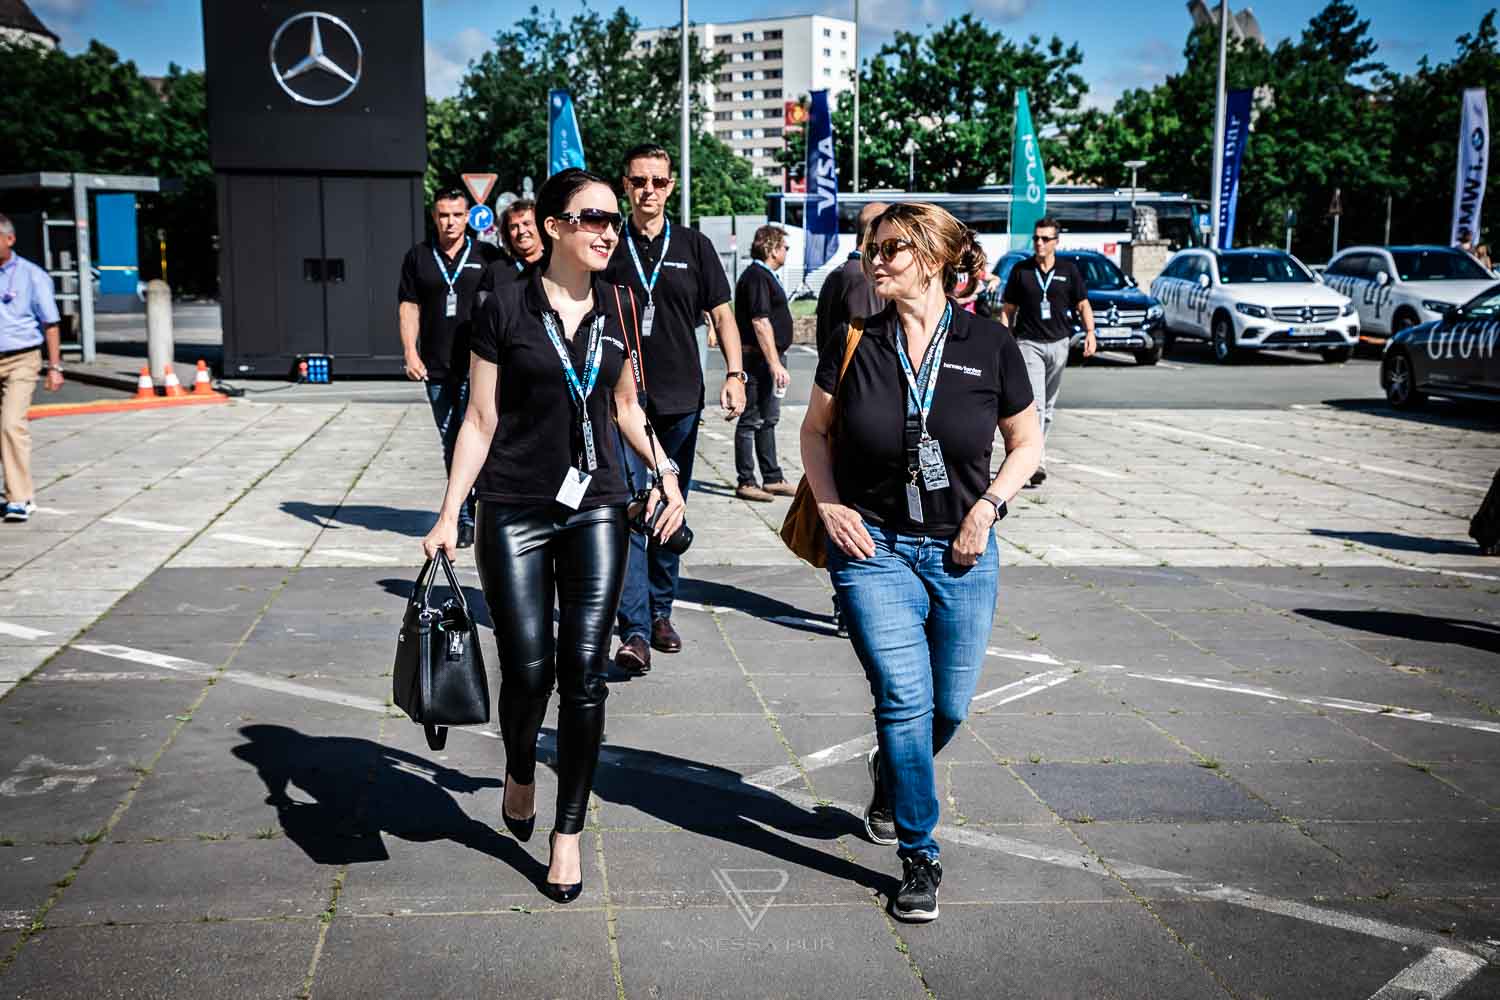 Vanessa Pur Formel E Rennen in Berlin - Flughafen Tempelhof - VIP bei MS Amlin Andretti Racing Team - FIA Formula E - Electric Streetracing - Grid Girl - Speed Event Motorsport Event Blogger